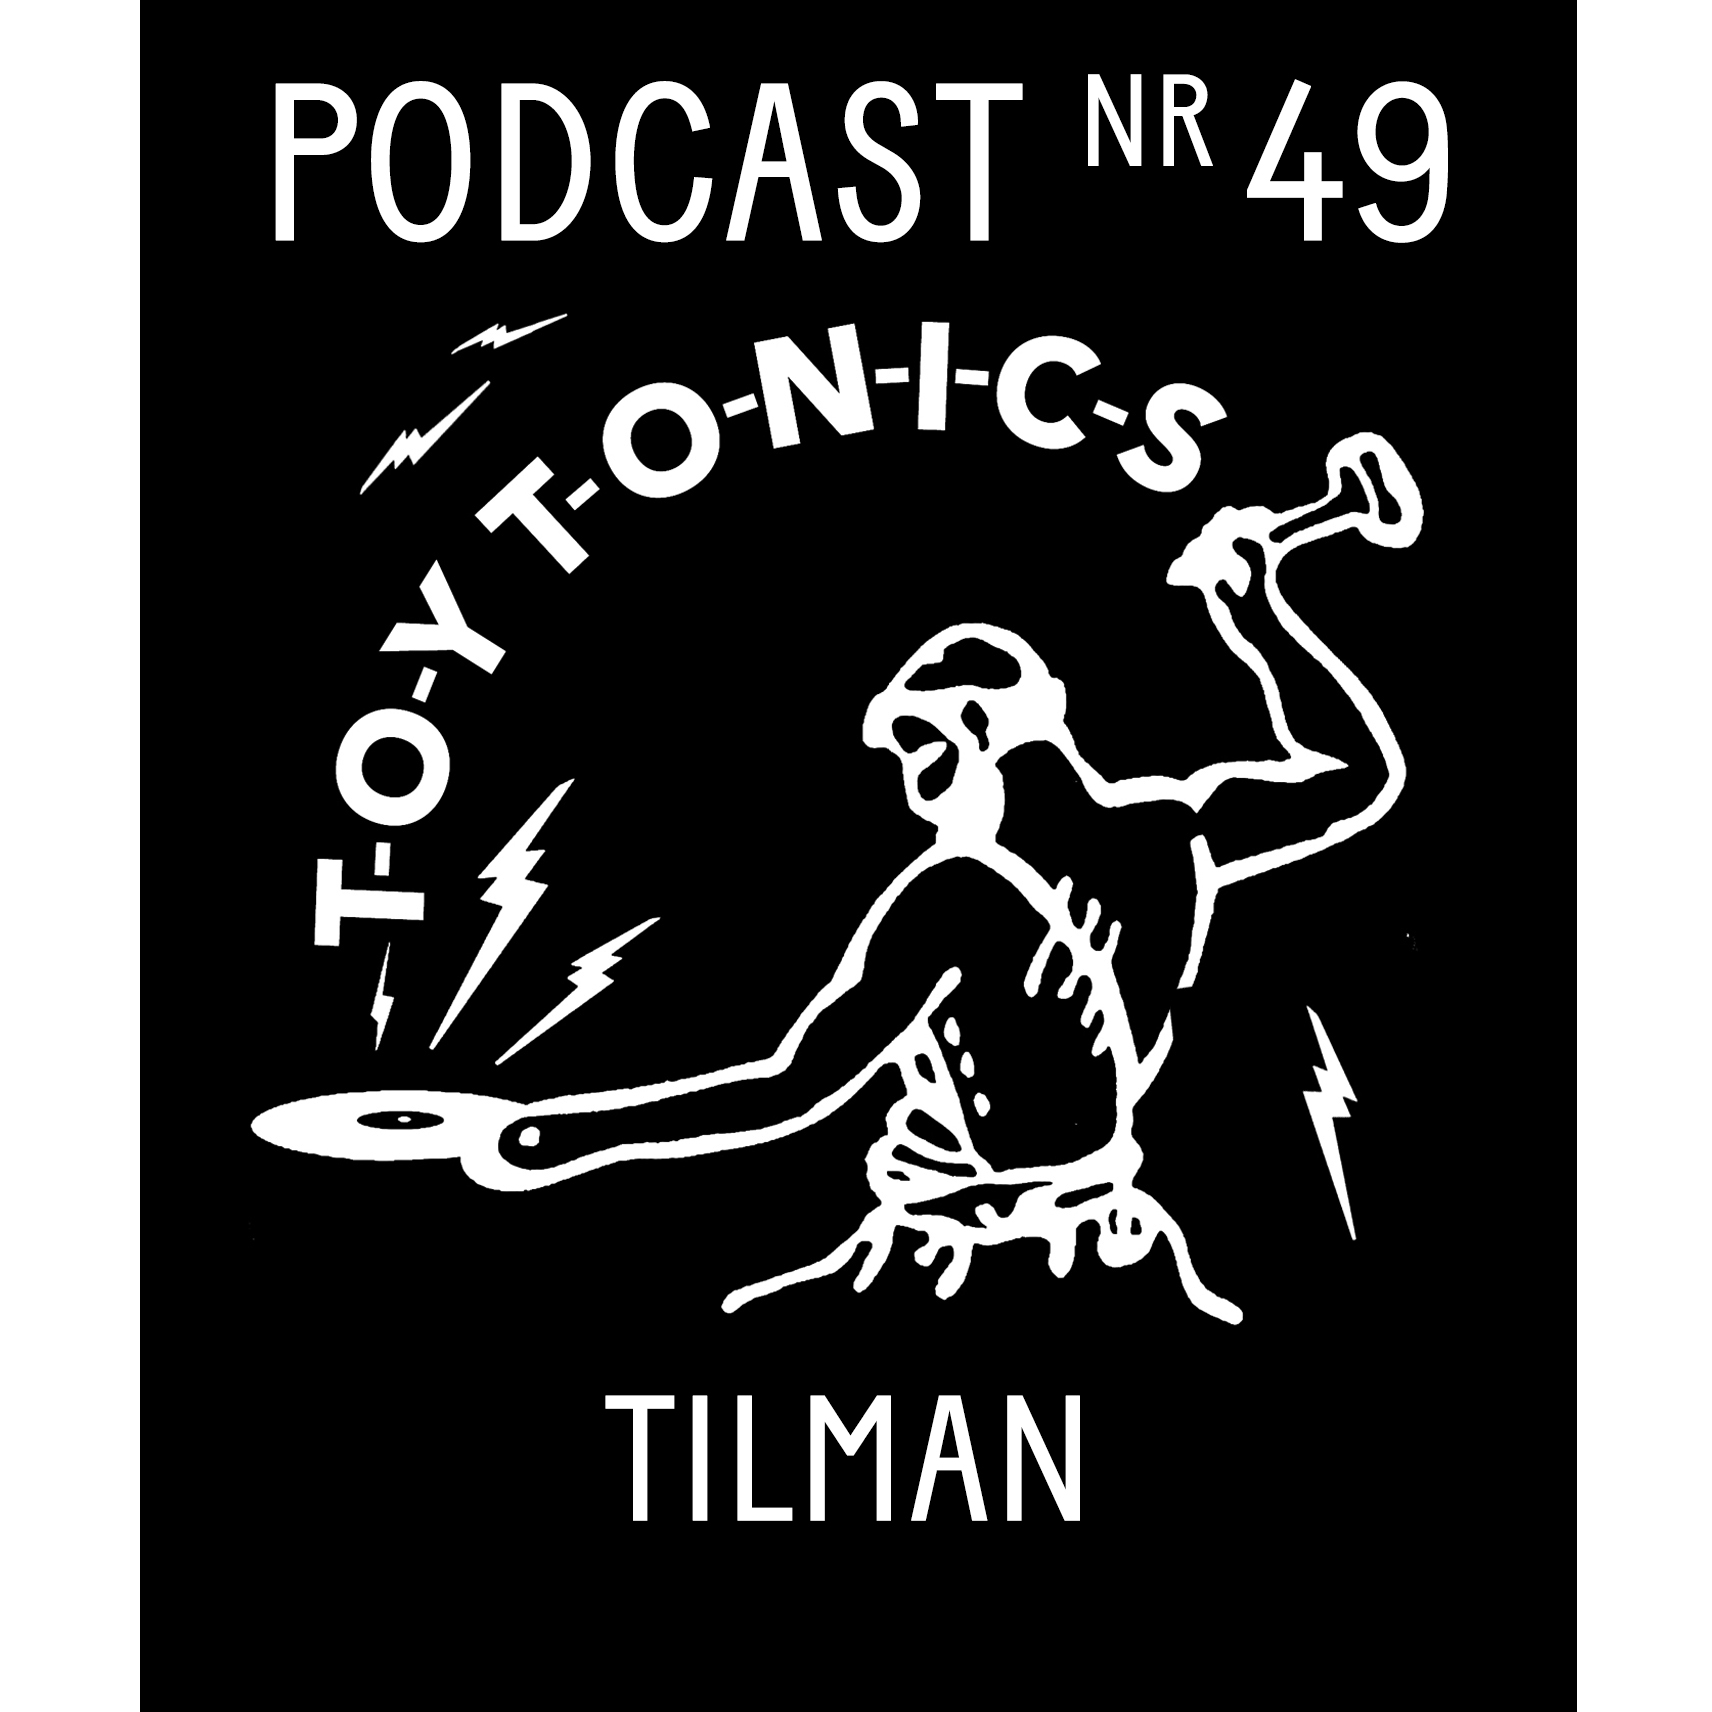 PODCAST NR 49 - Tilman